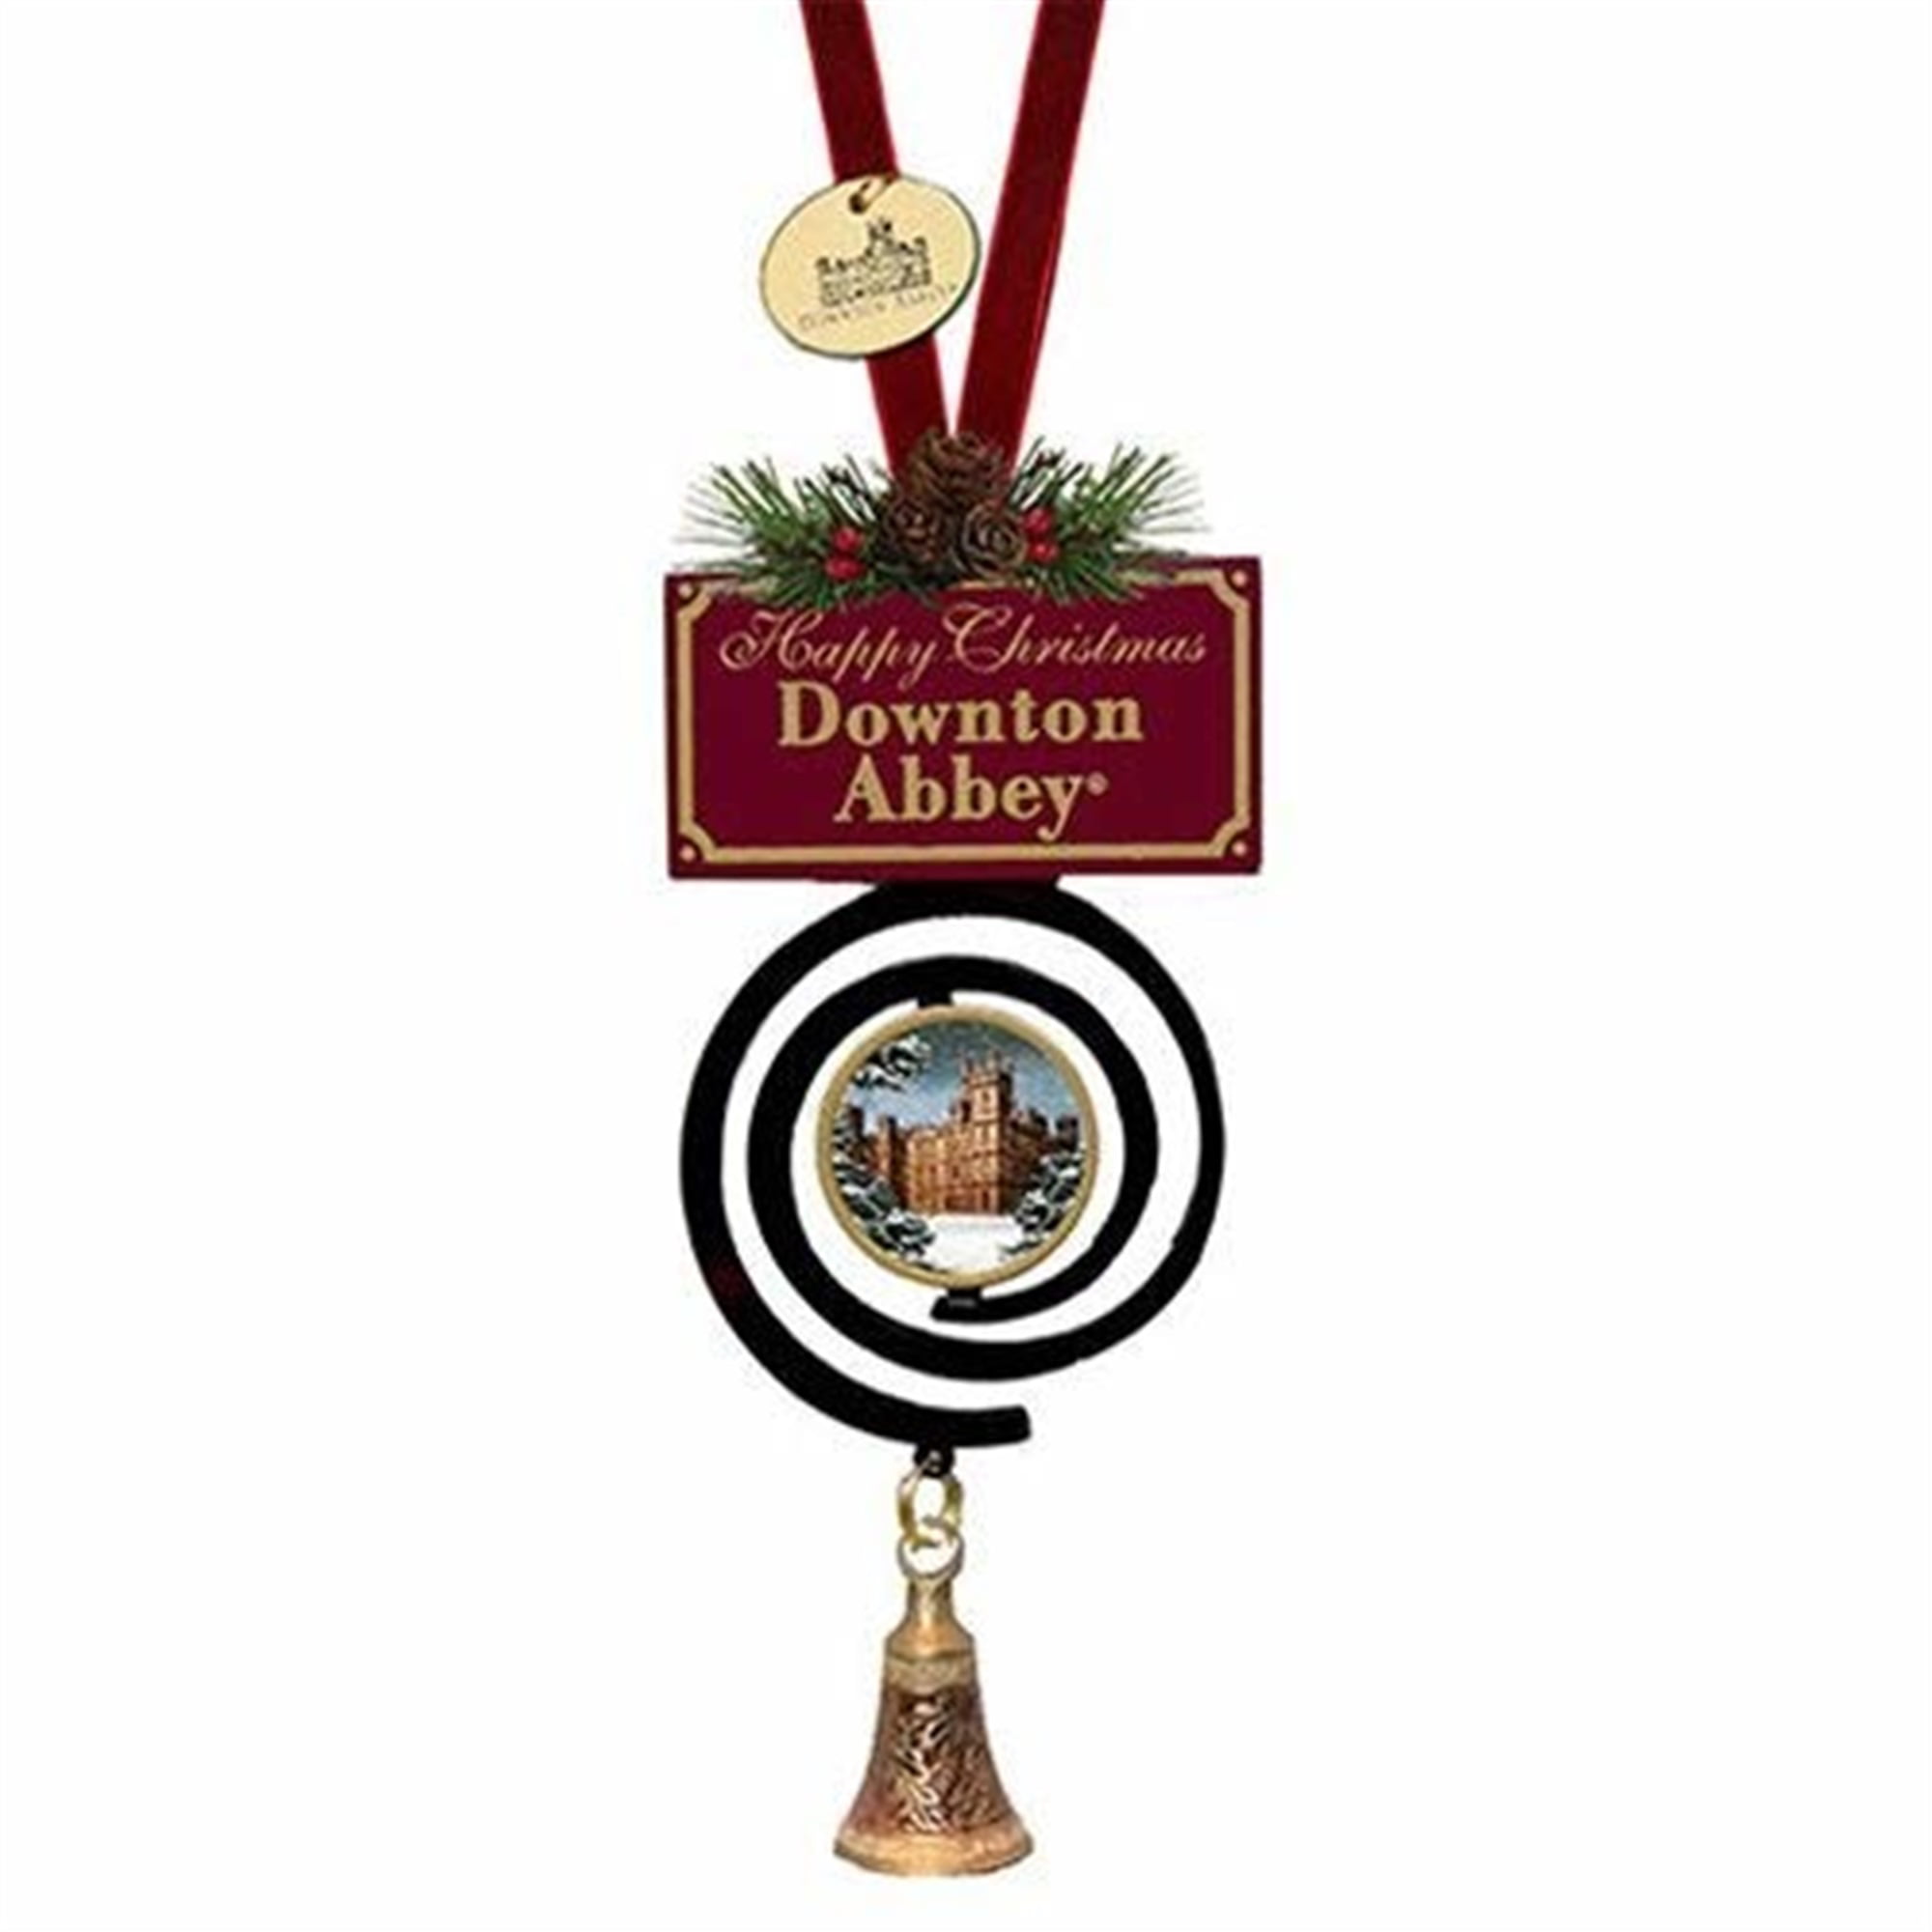 Downton Abbey Bell Ornament 